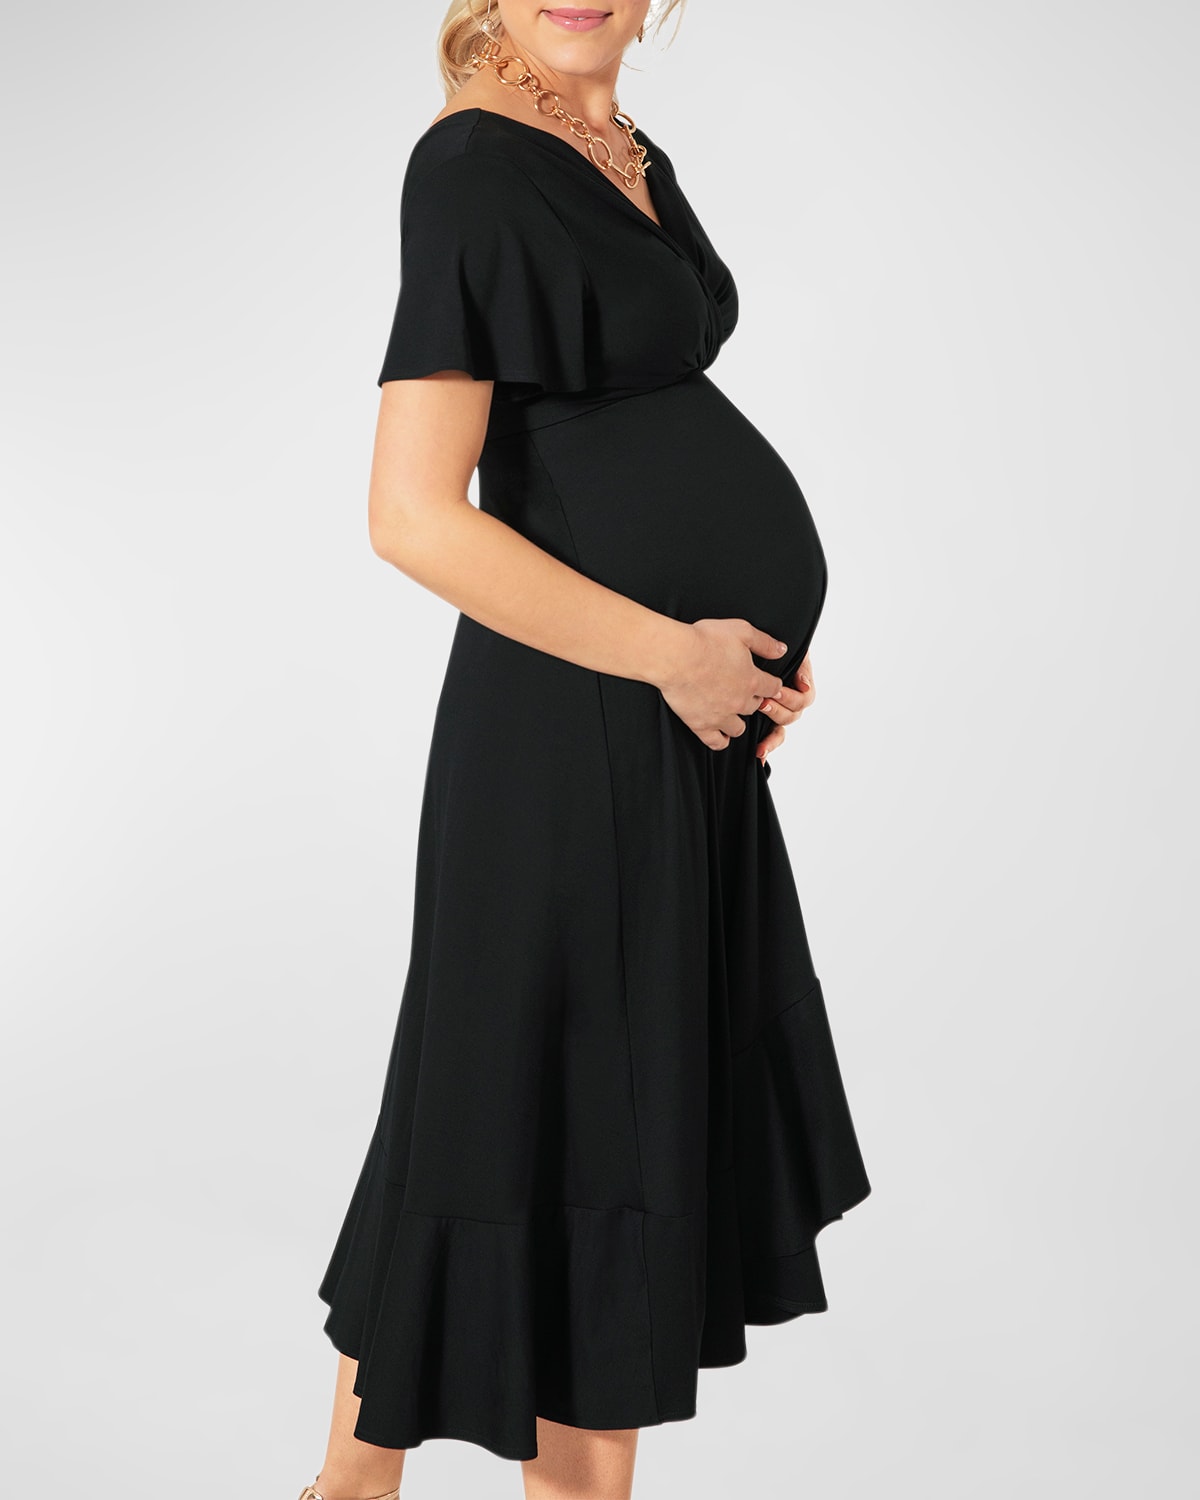 Tiffany Rose Amelia Lace Maternity Sheath Dress